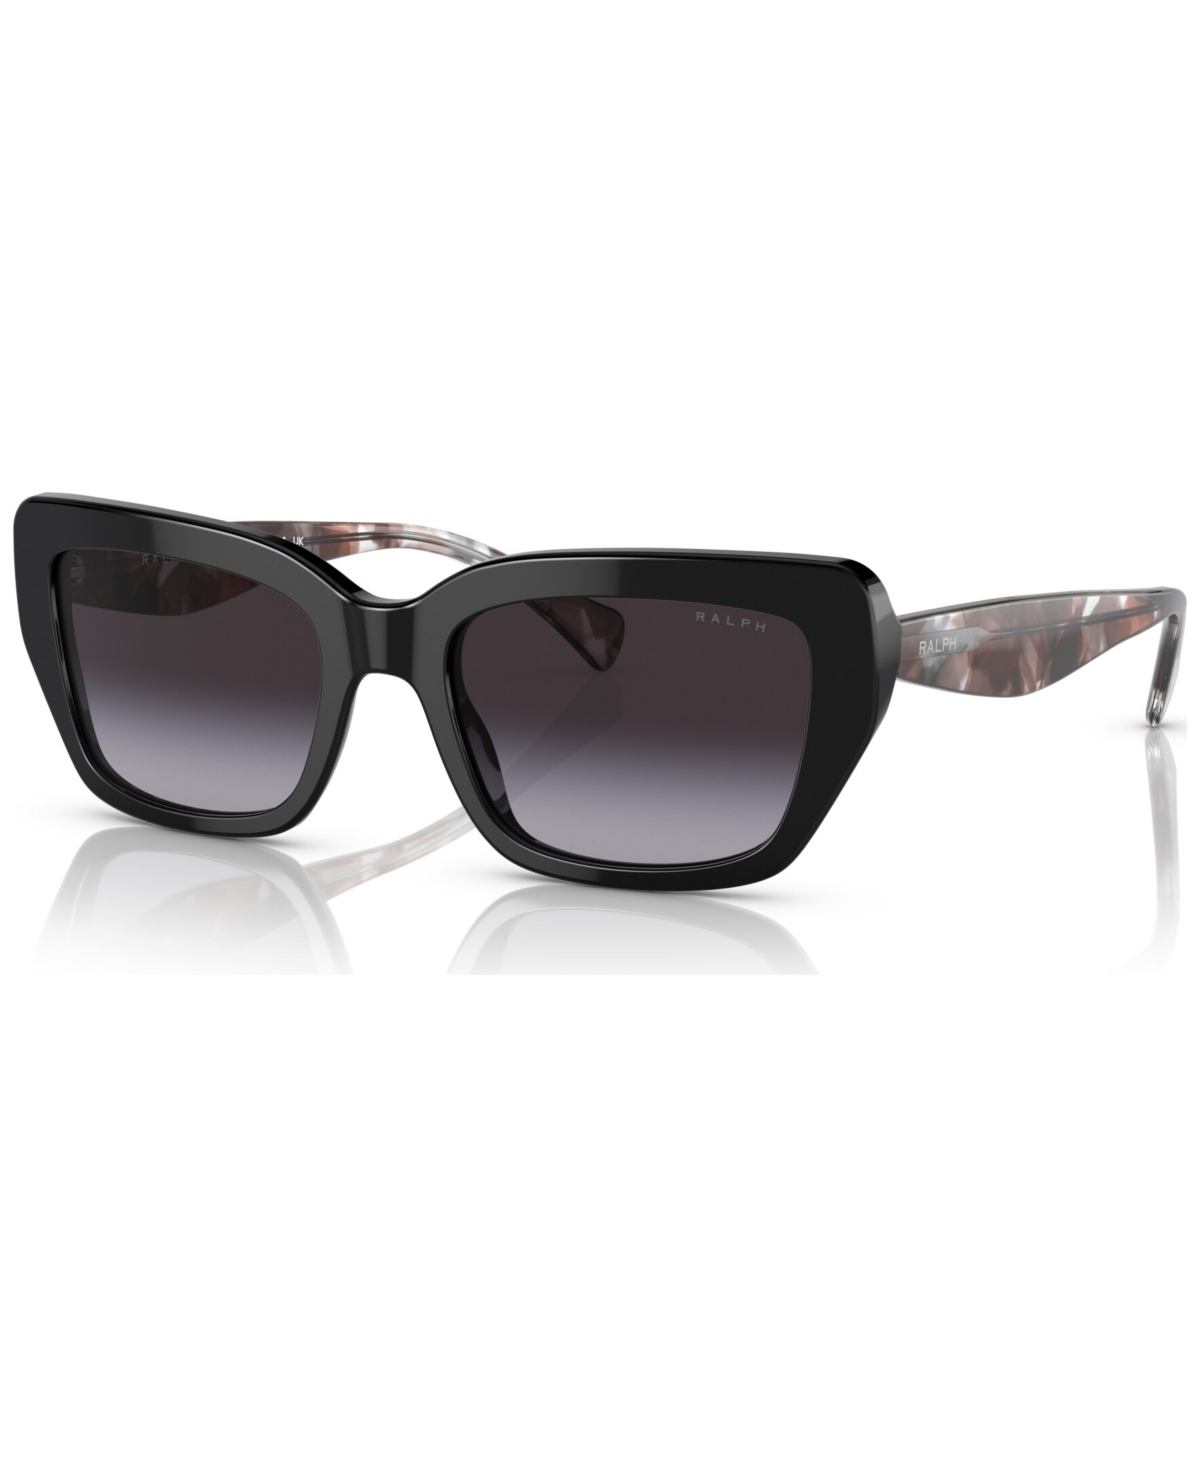 Women's Sunglasses, RA529253-y - Shiny Black